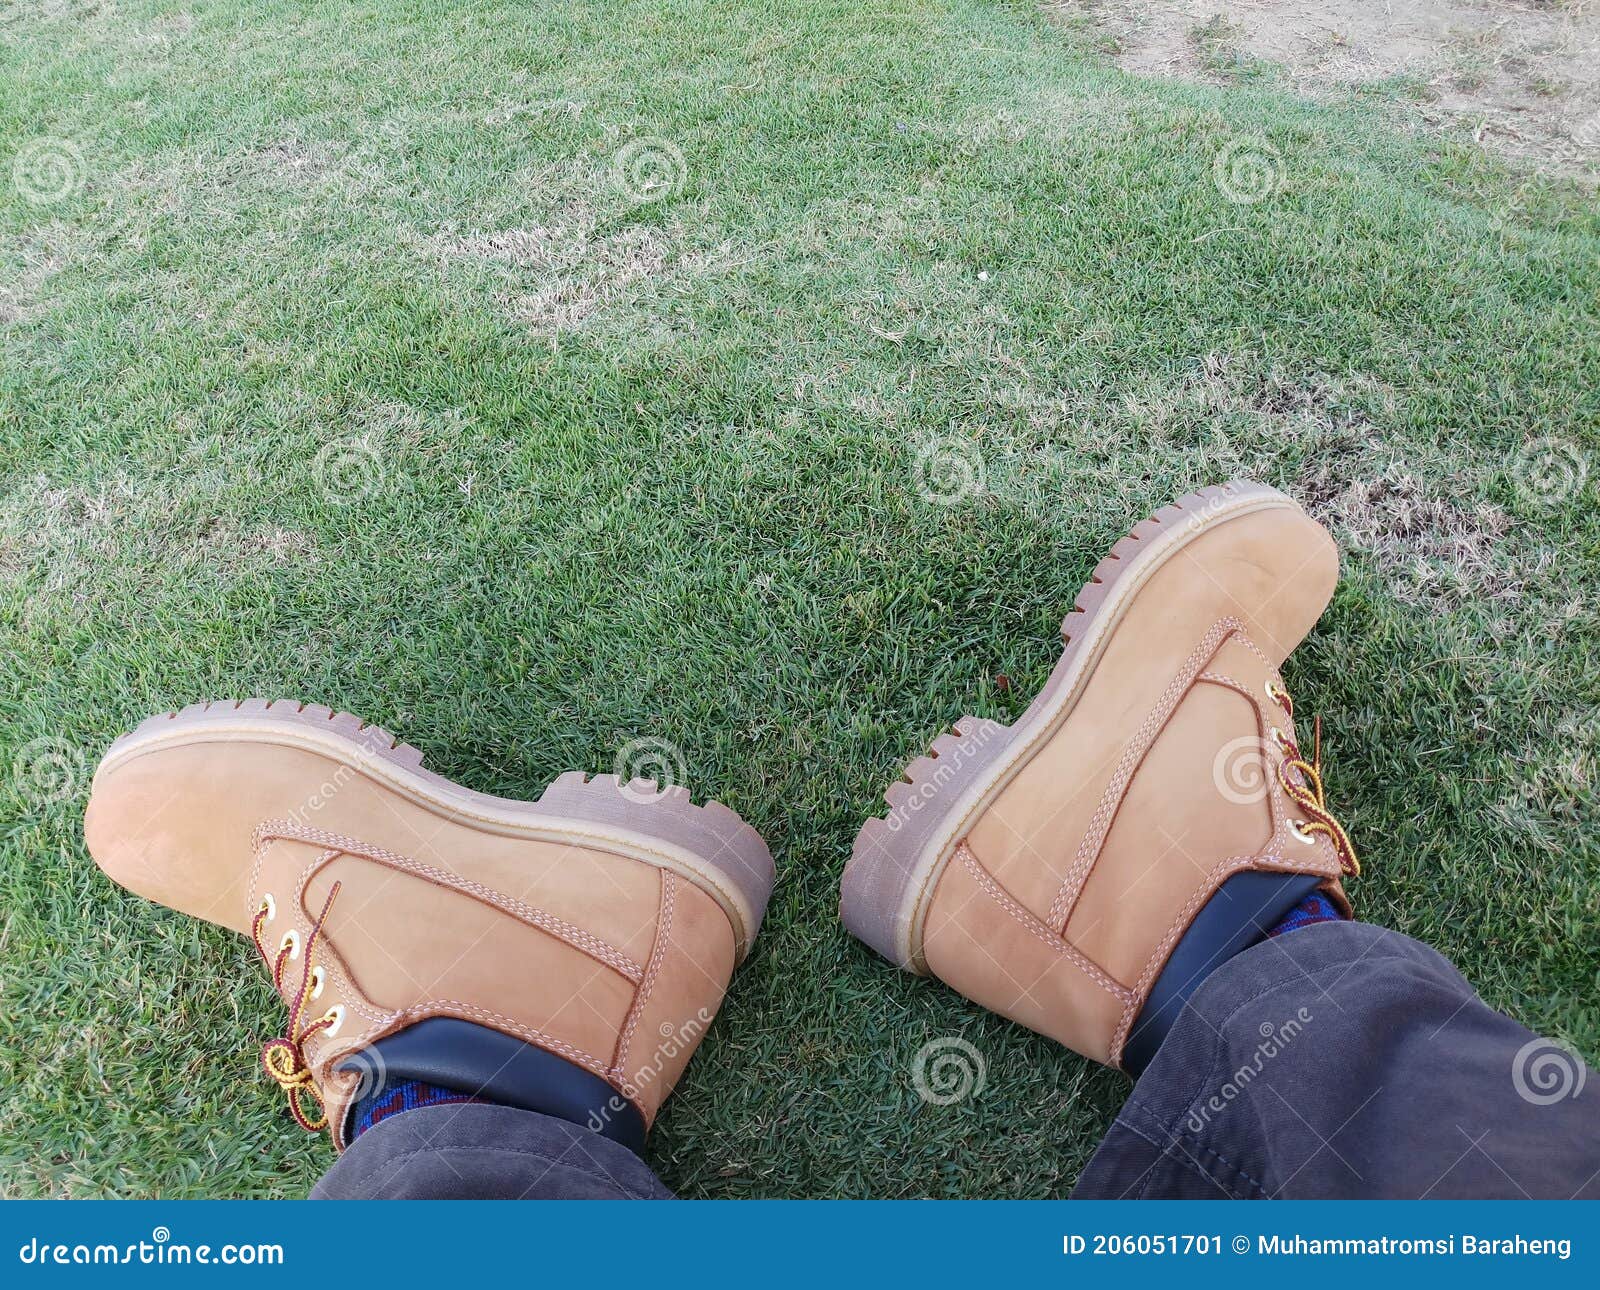 timberland brand men& x27;s shoes on green grass.